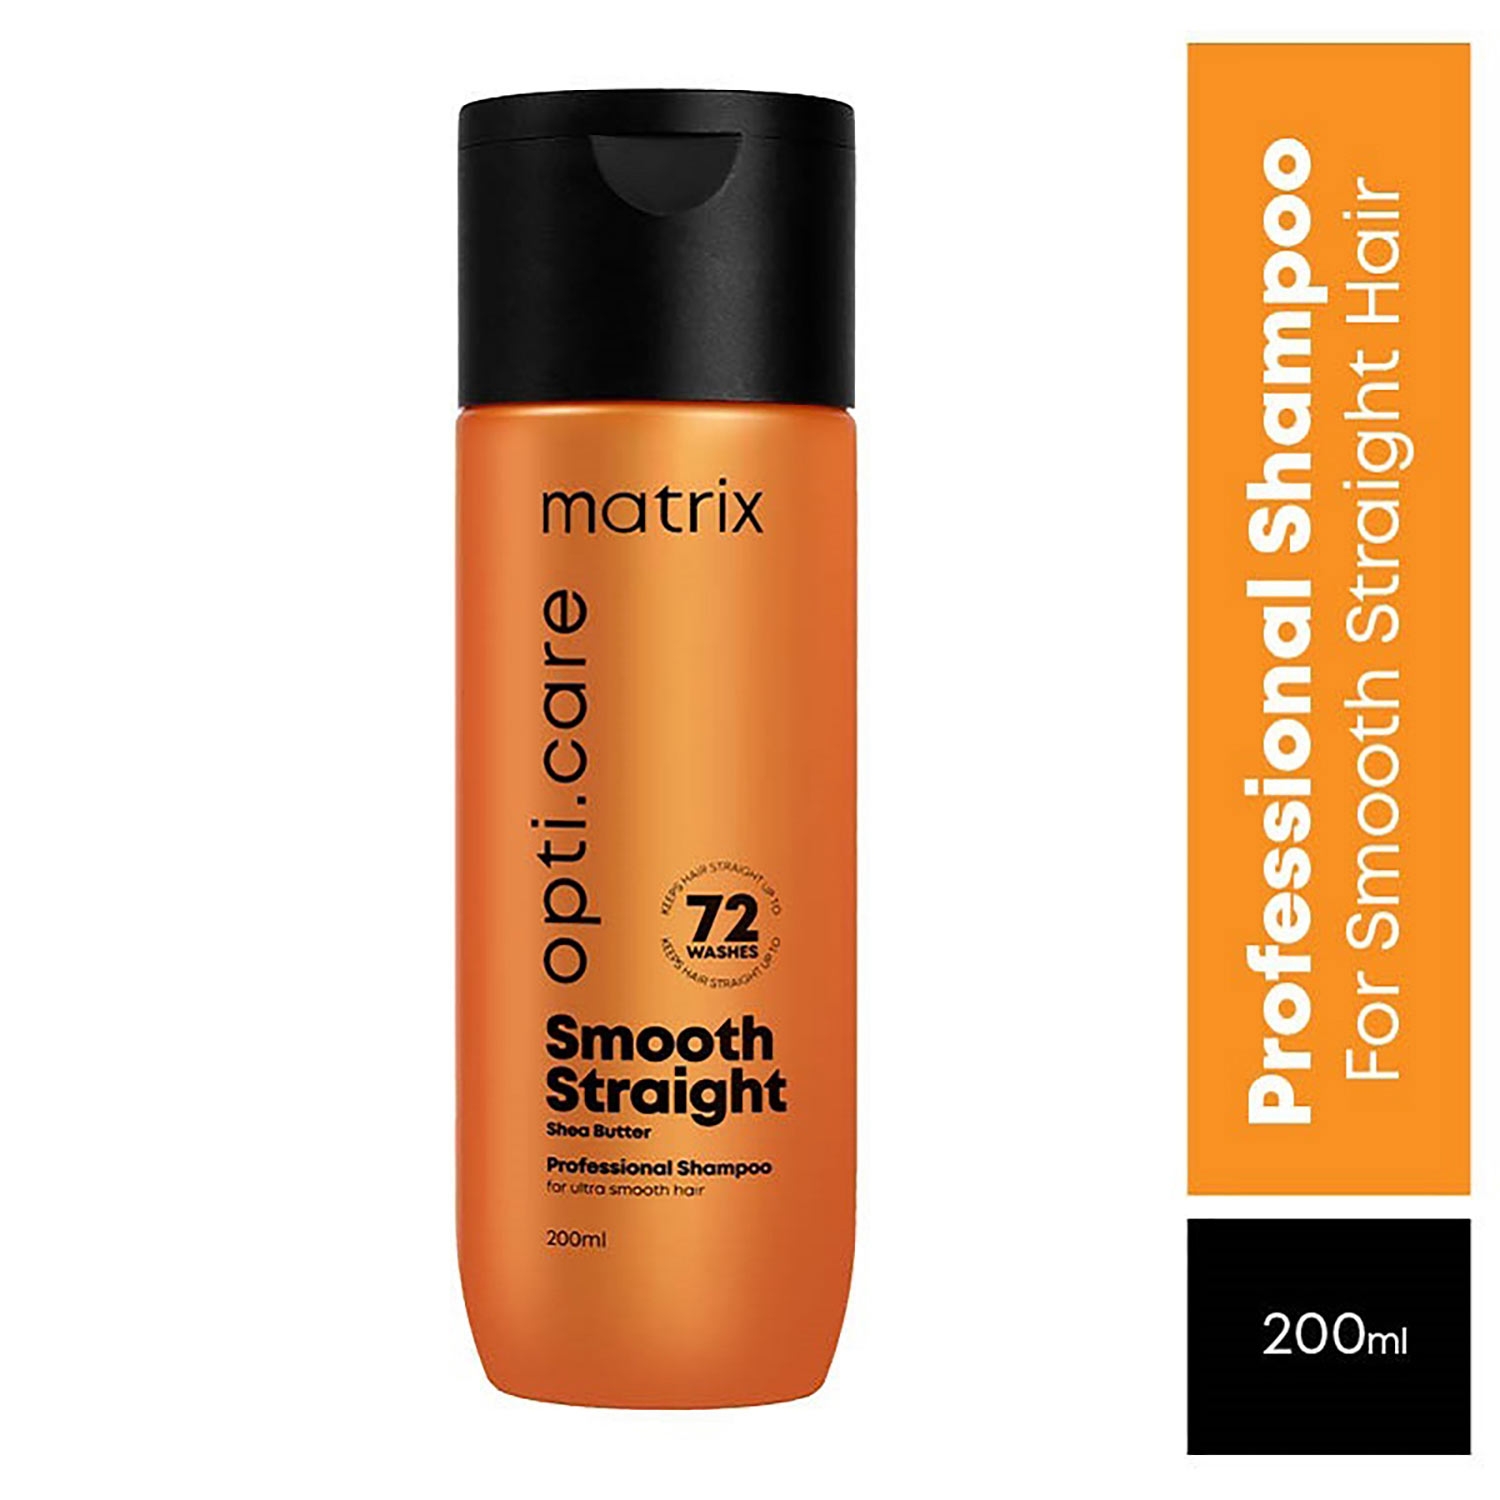 Matrix | Matrix Opti Care Smooth Straight Professional Shampoo (200ml)